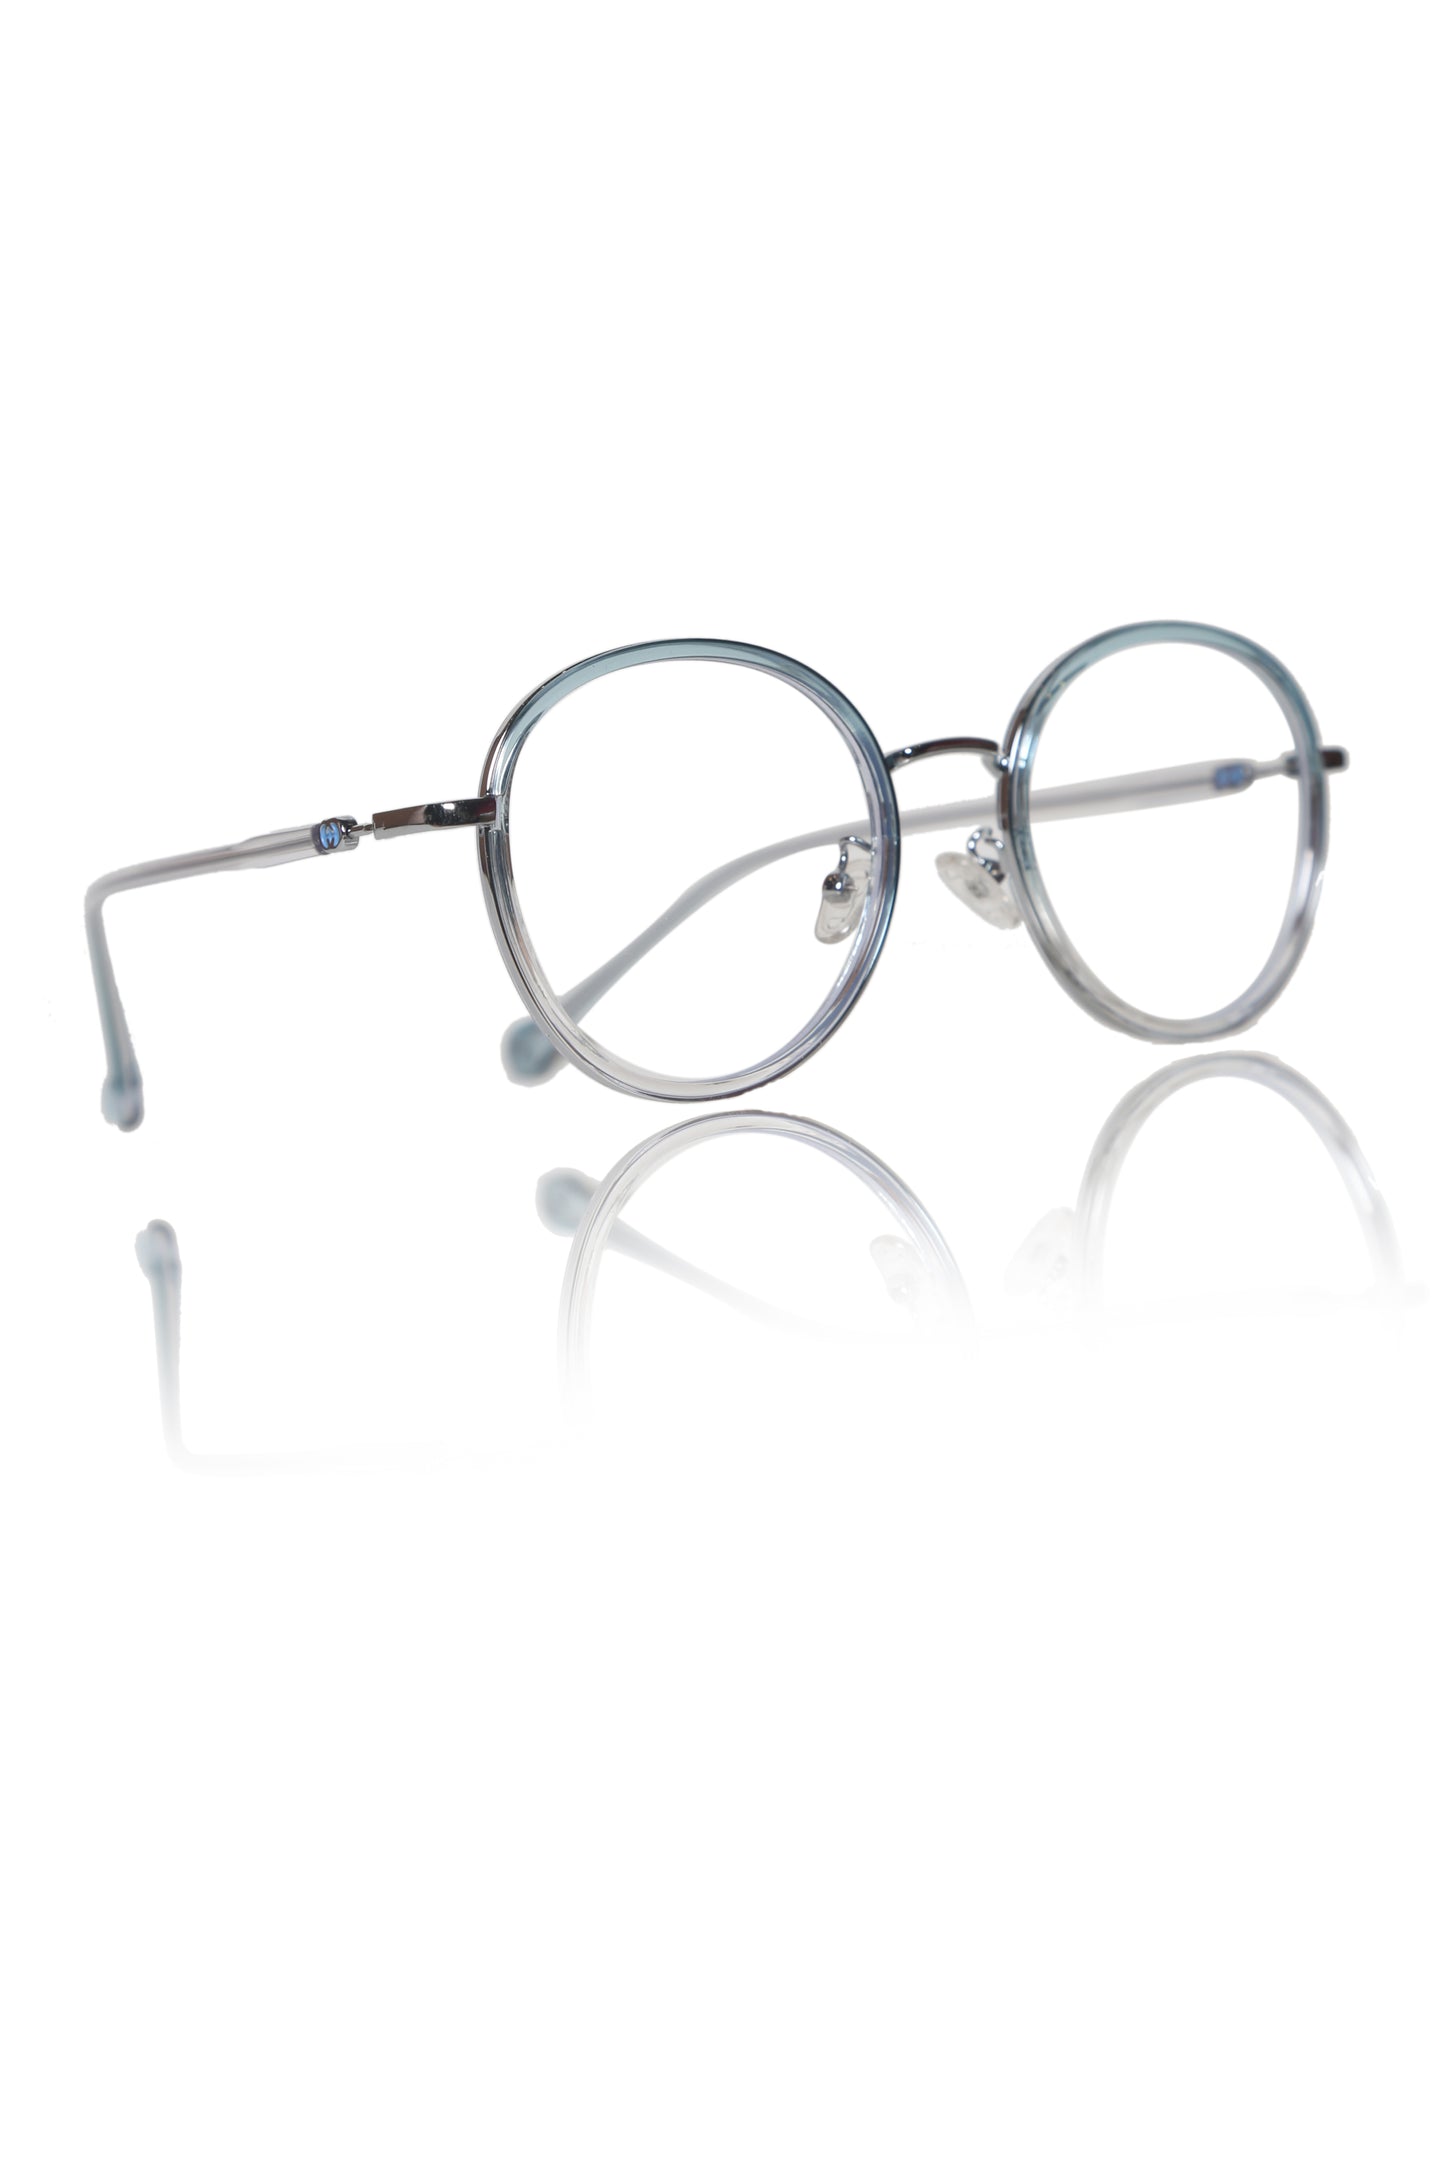 Jodykoes® Premium Series Round Eyewear Eyeglasses Spectacles Frame for Men and Women (Aqua)